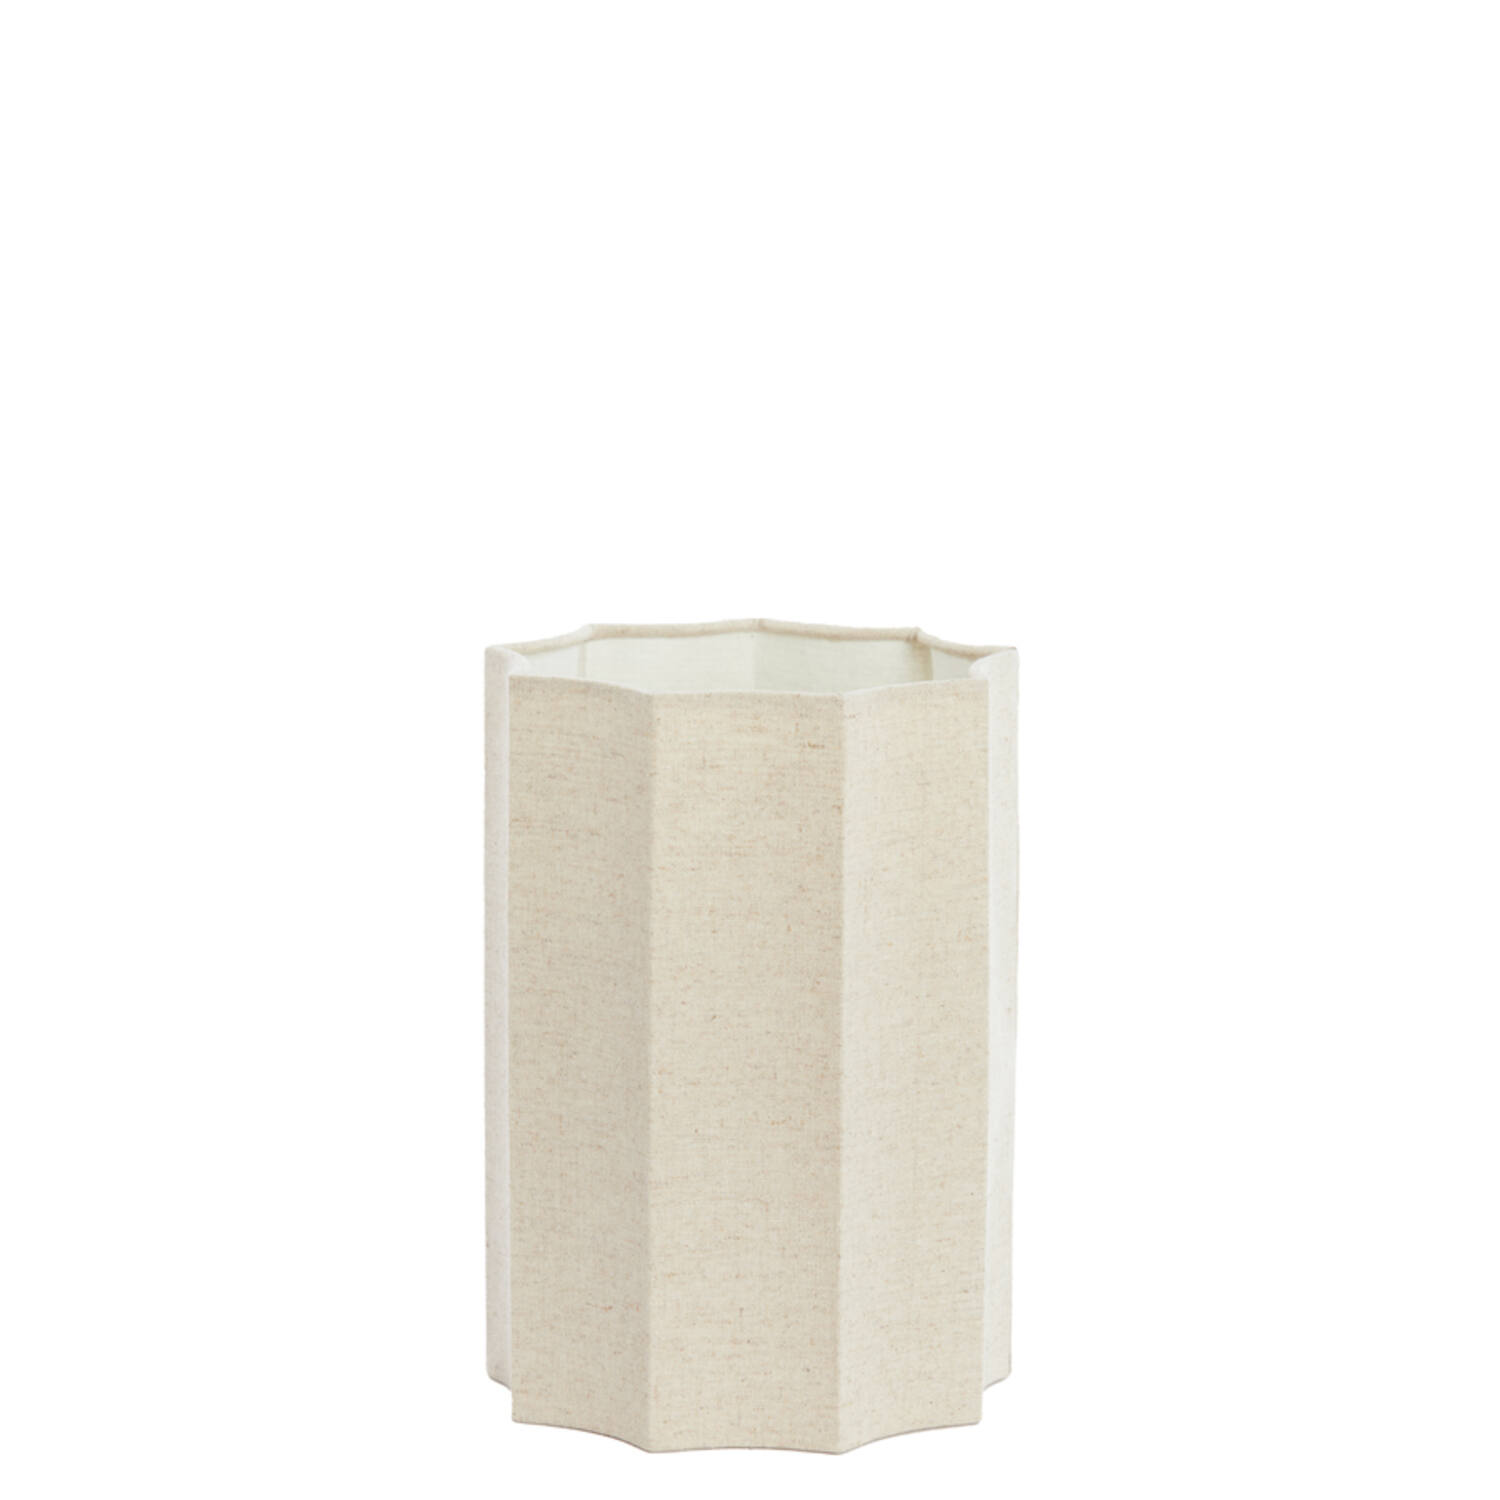 Shade cylinder 18-18-25 cm DISLI natural